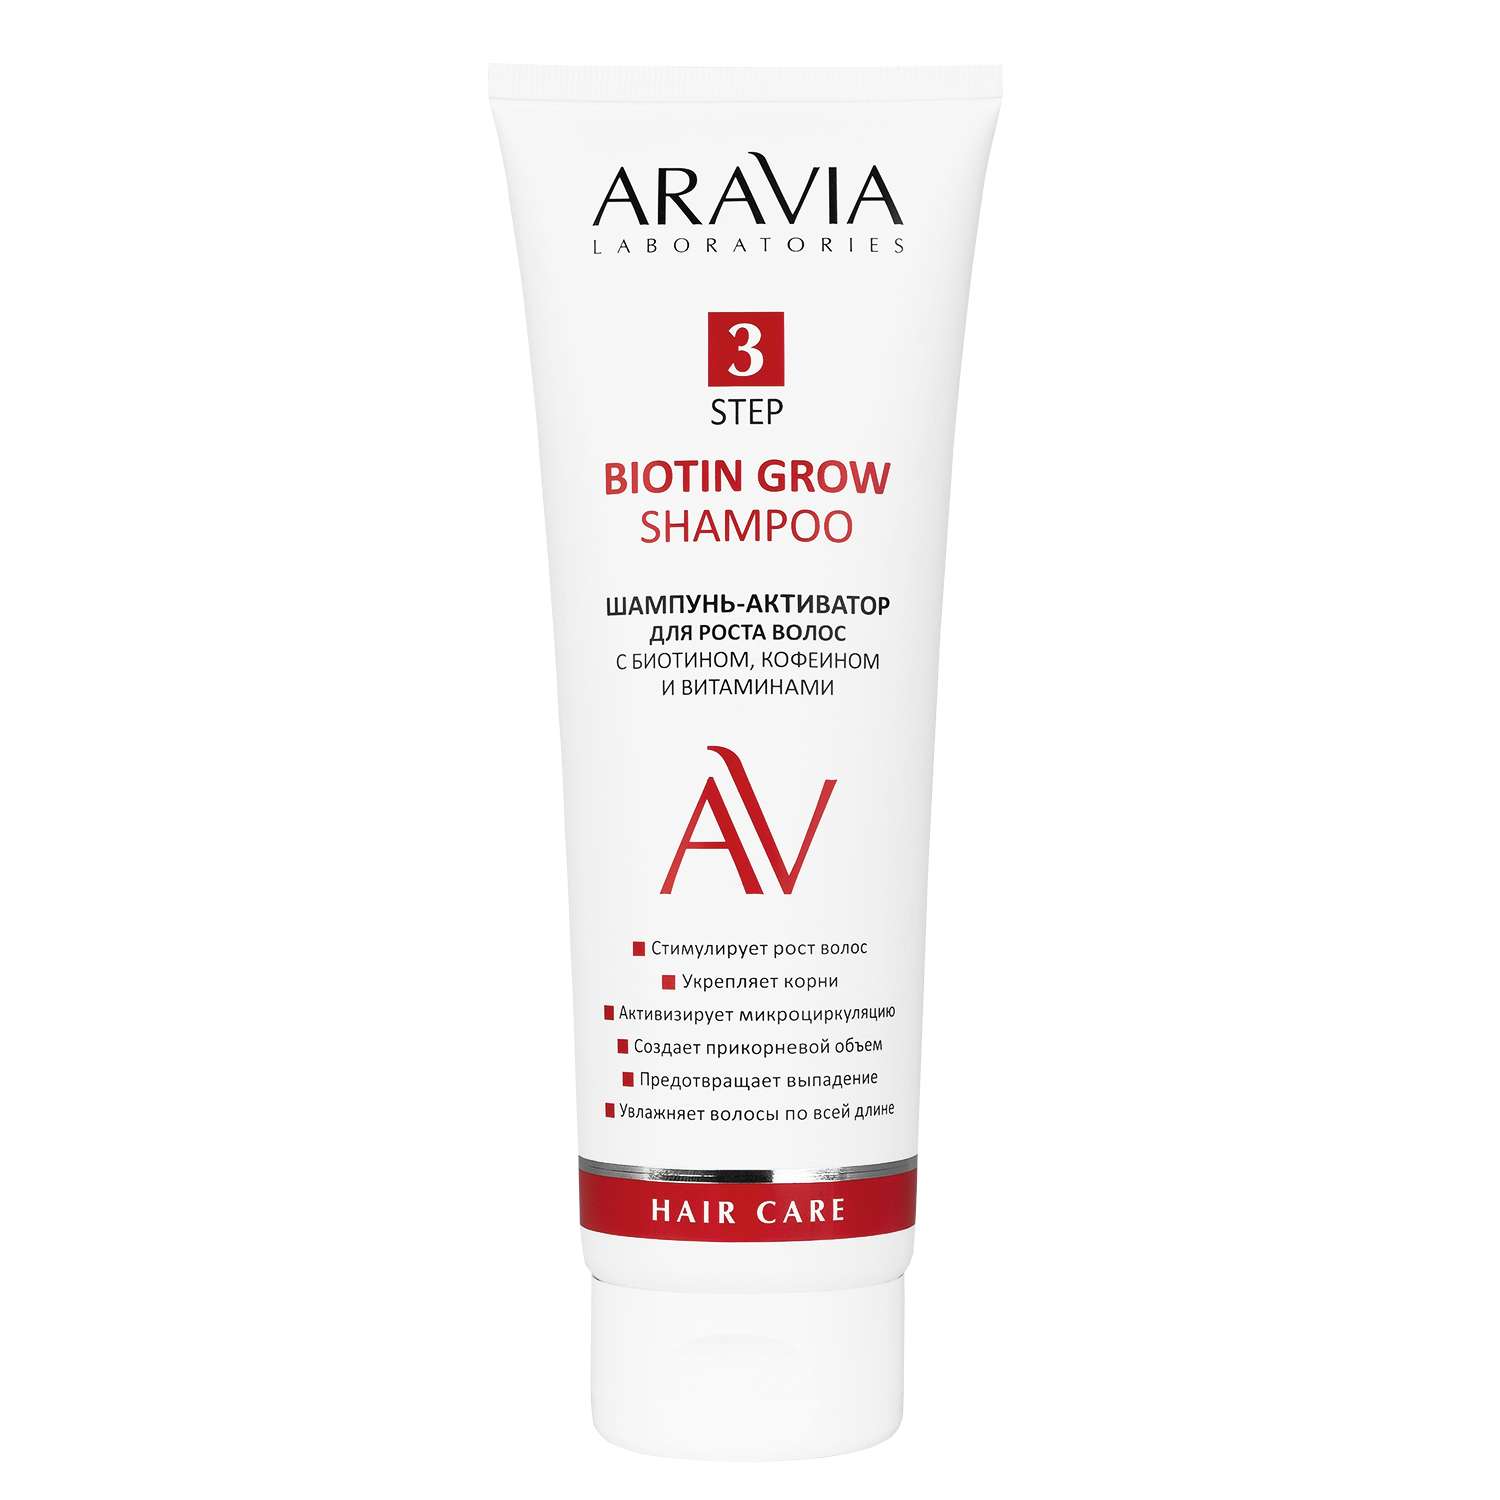 Шампунь-активатор ARAVIA Laboratories для роста волос с биотином кофеином и витаминами Biotin Grow Shampoo 250 мл - фото 2